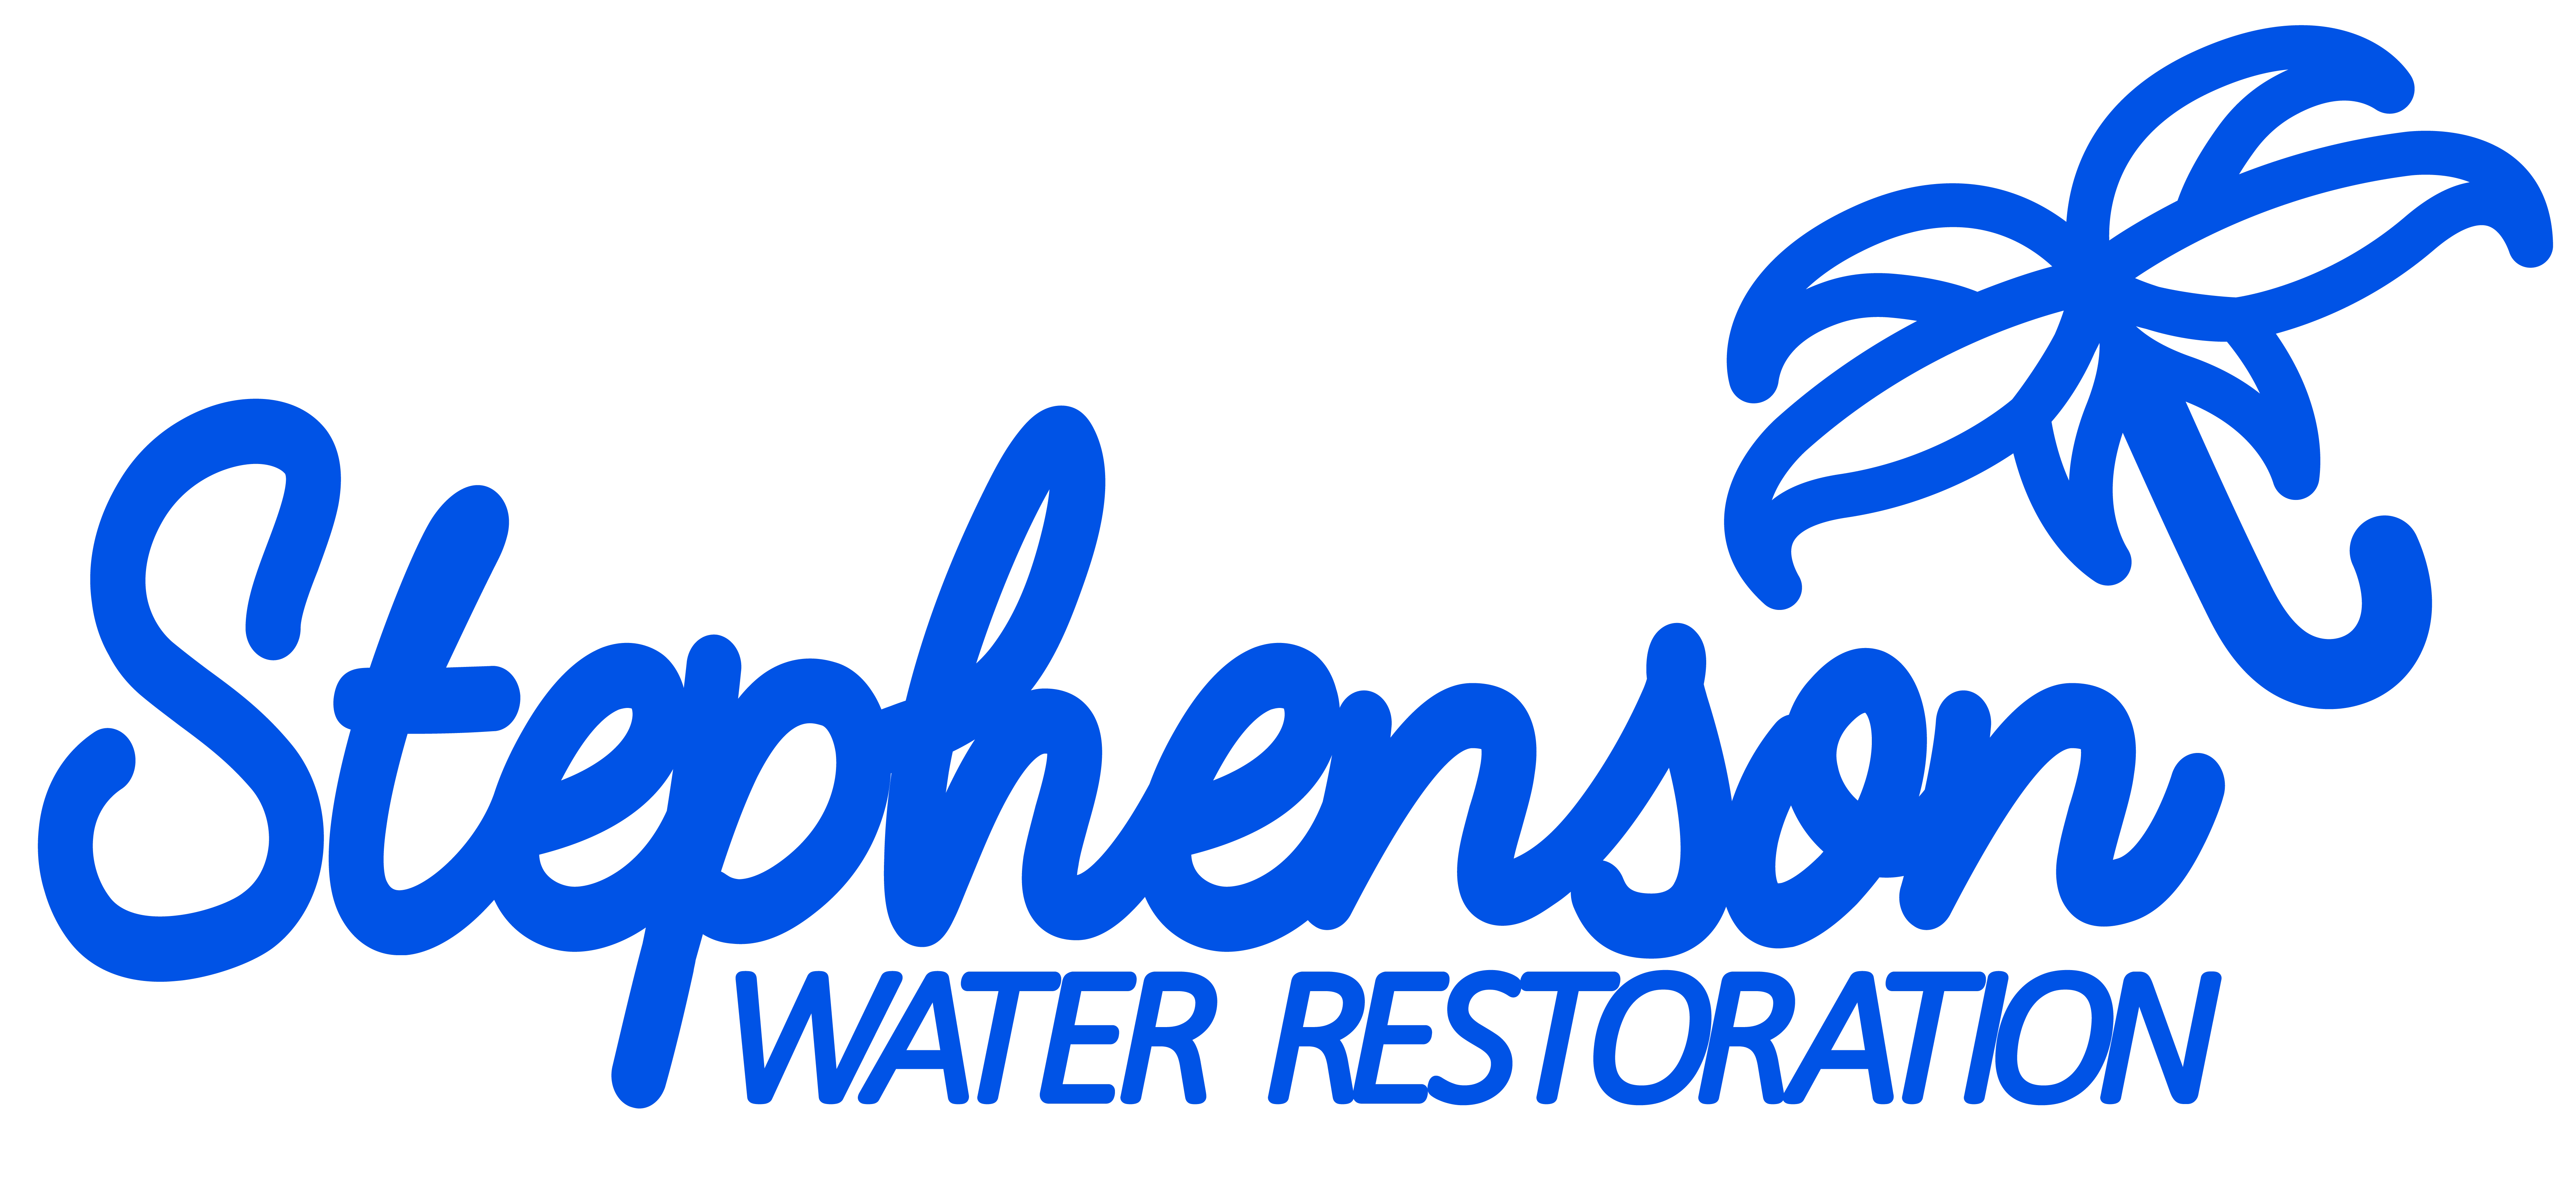 Blue Stephenson Water Restoration Logo & type